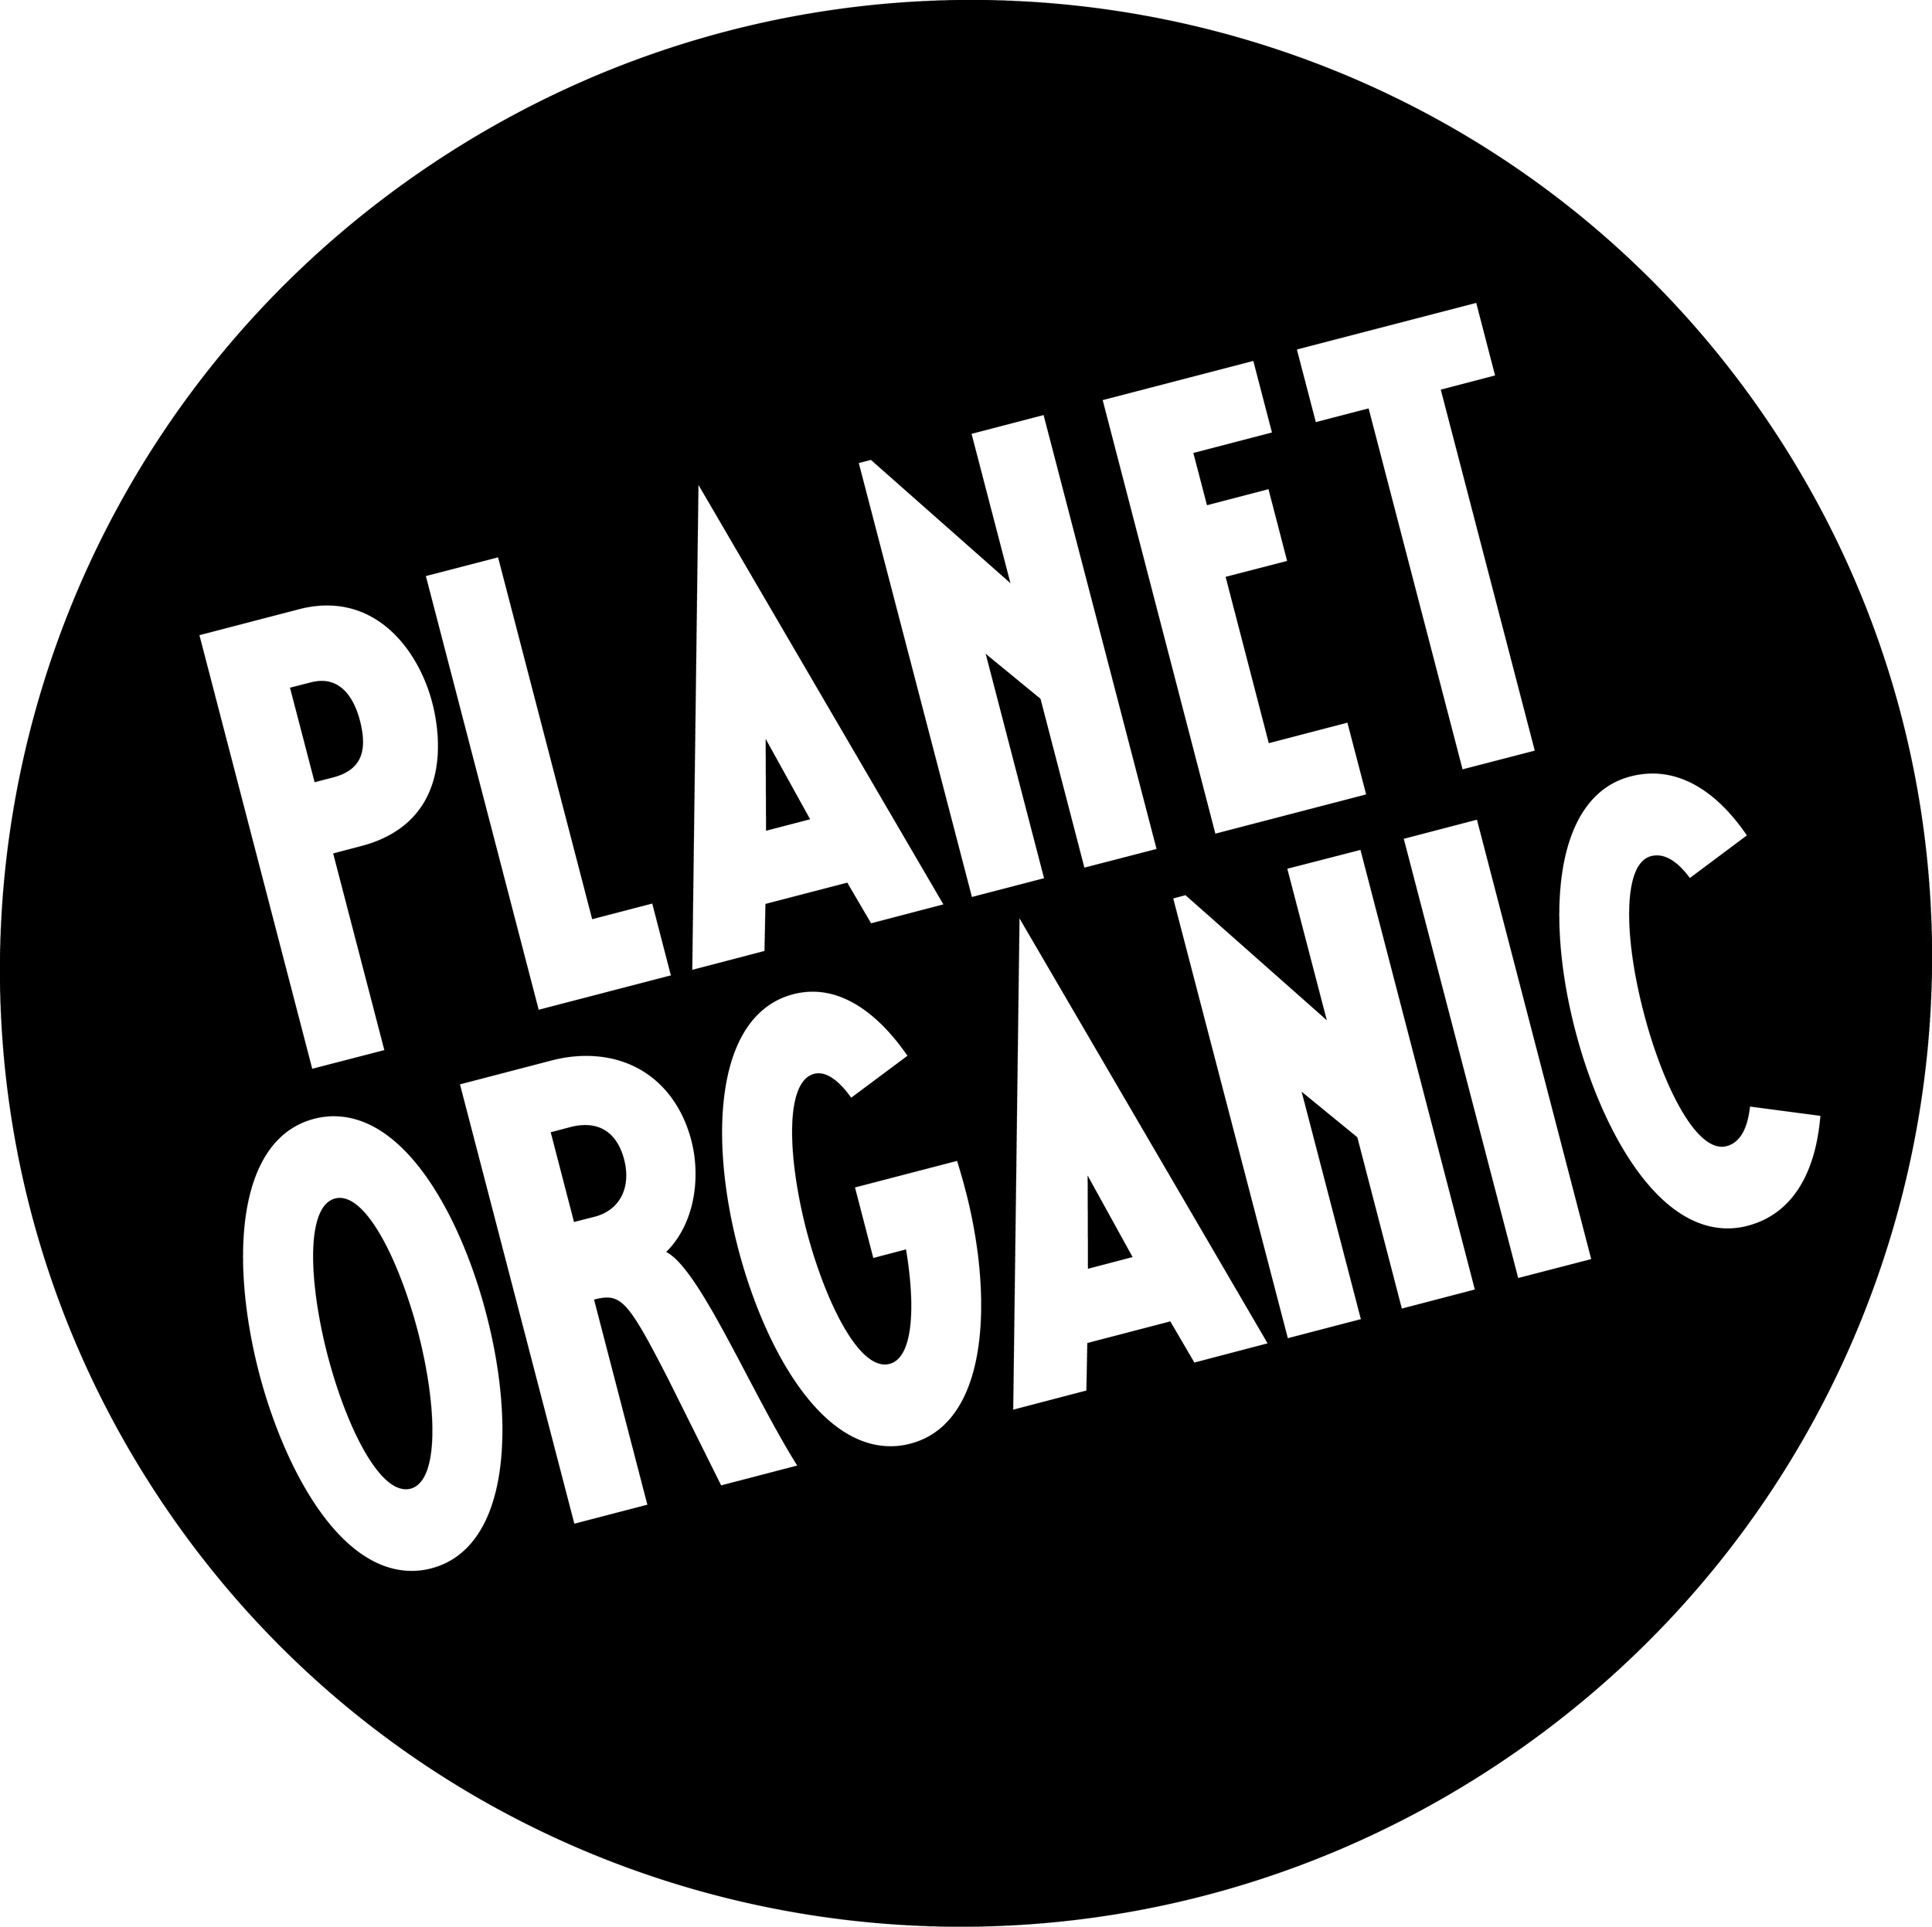 PlanetOrganic_roundel_wht on blk_L.jpg